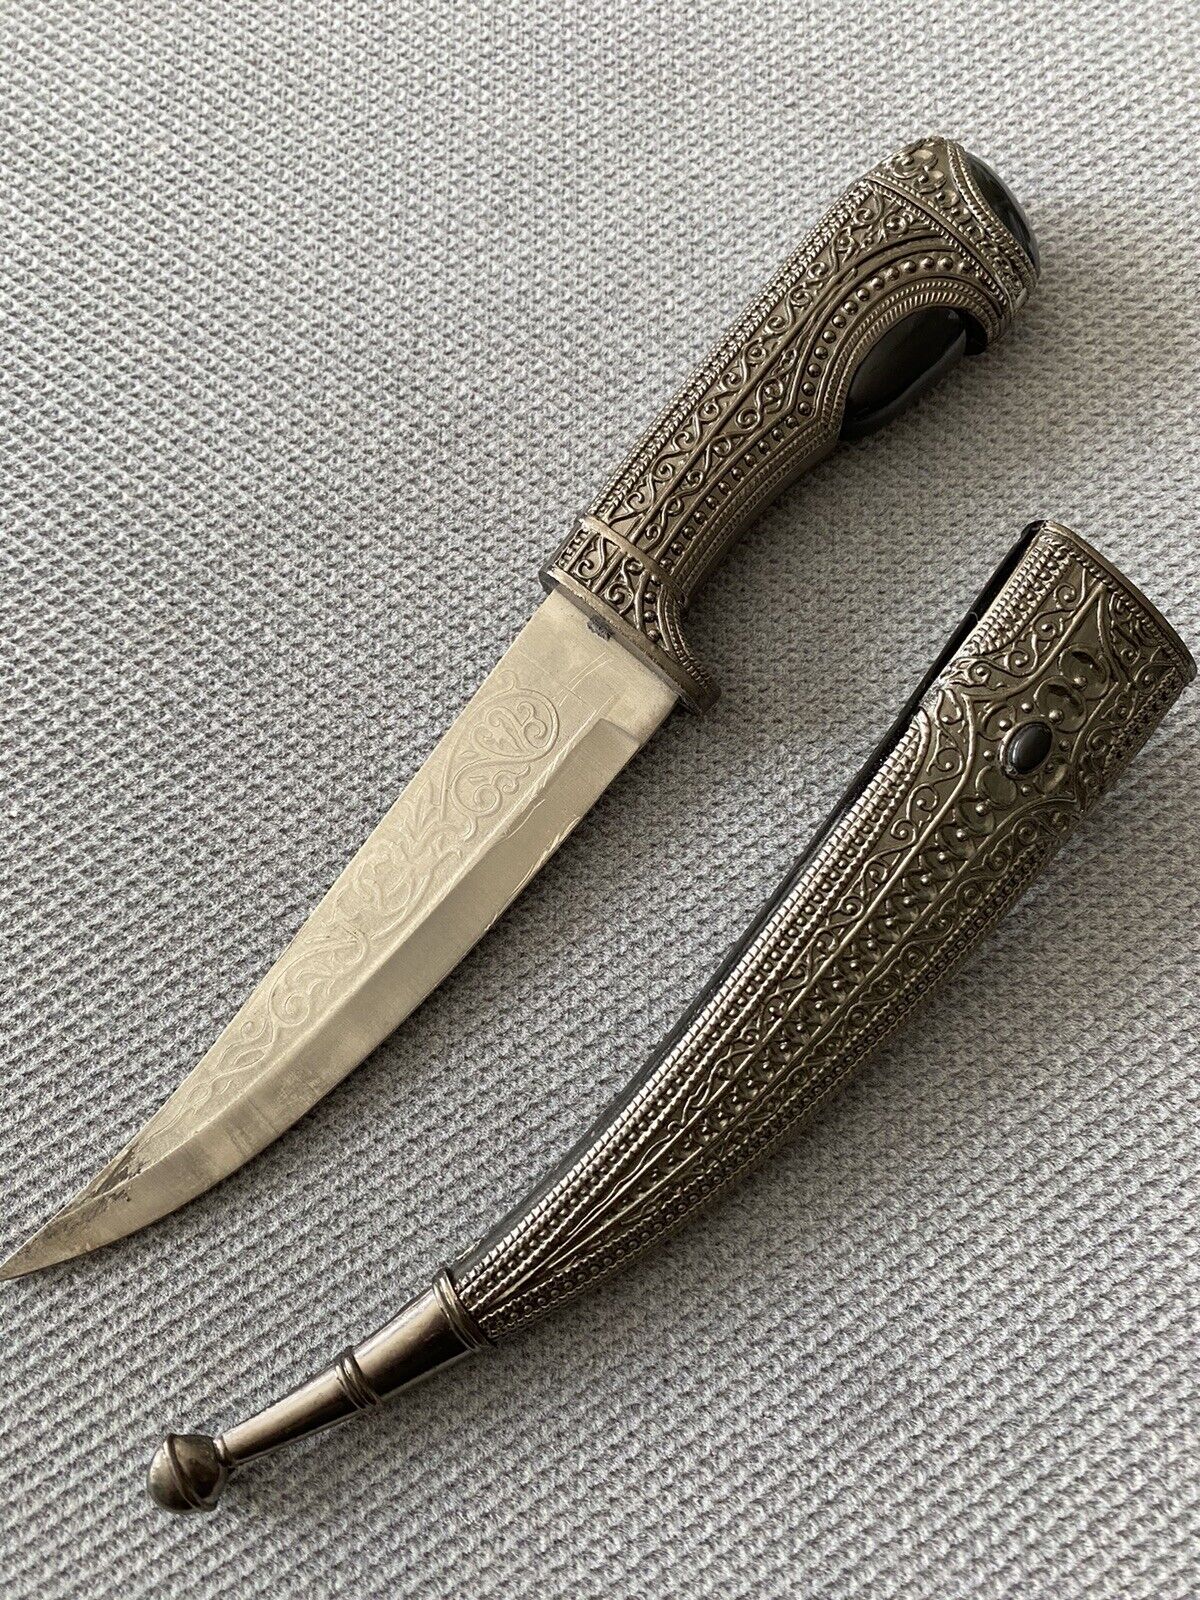 Contemporary South Asian steel knife/dagger not Sikh kirpan khanjar jambiya